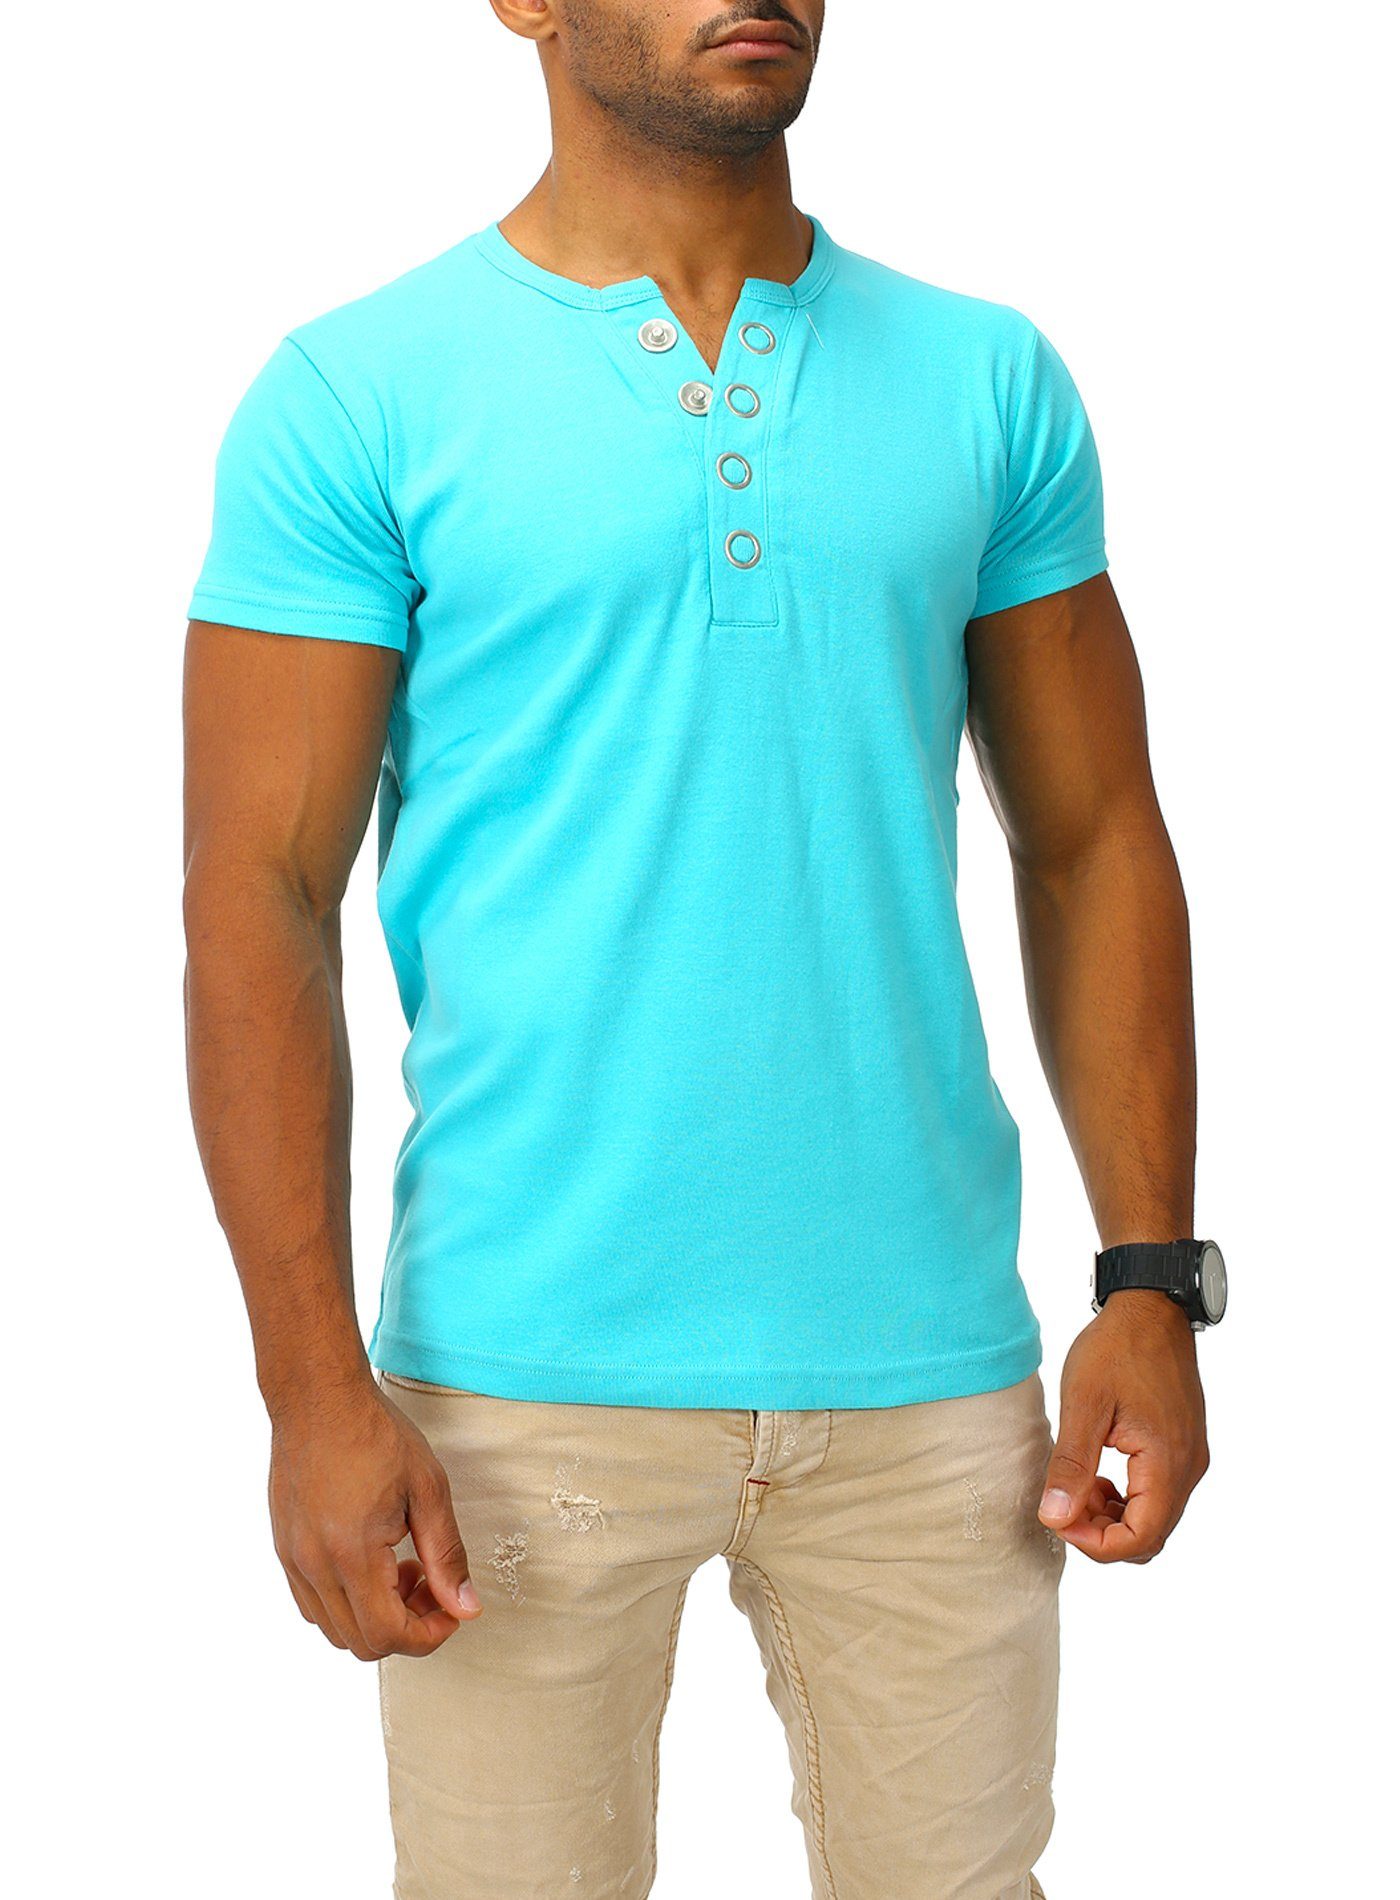 Joe Franks Big Button turquoise stylischem Fit in Slim T-Shirt